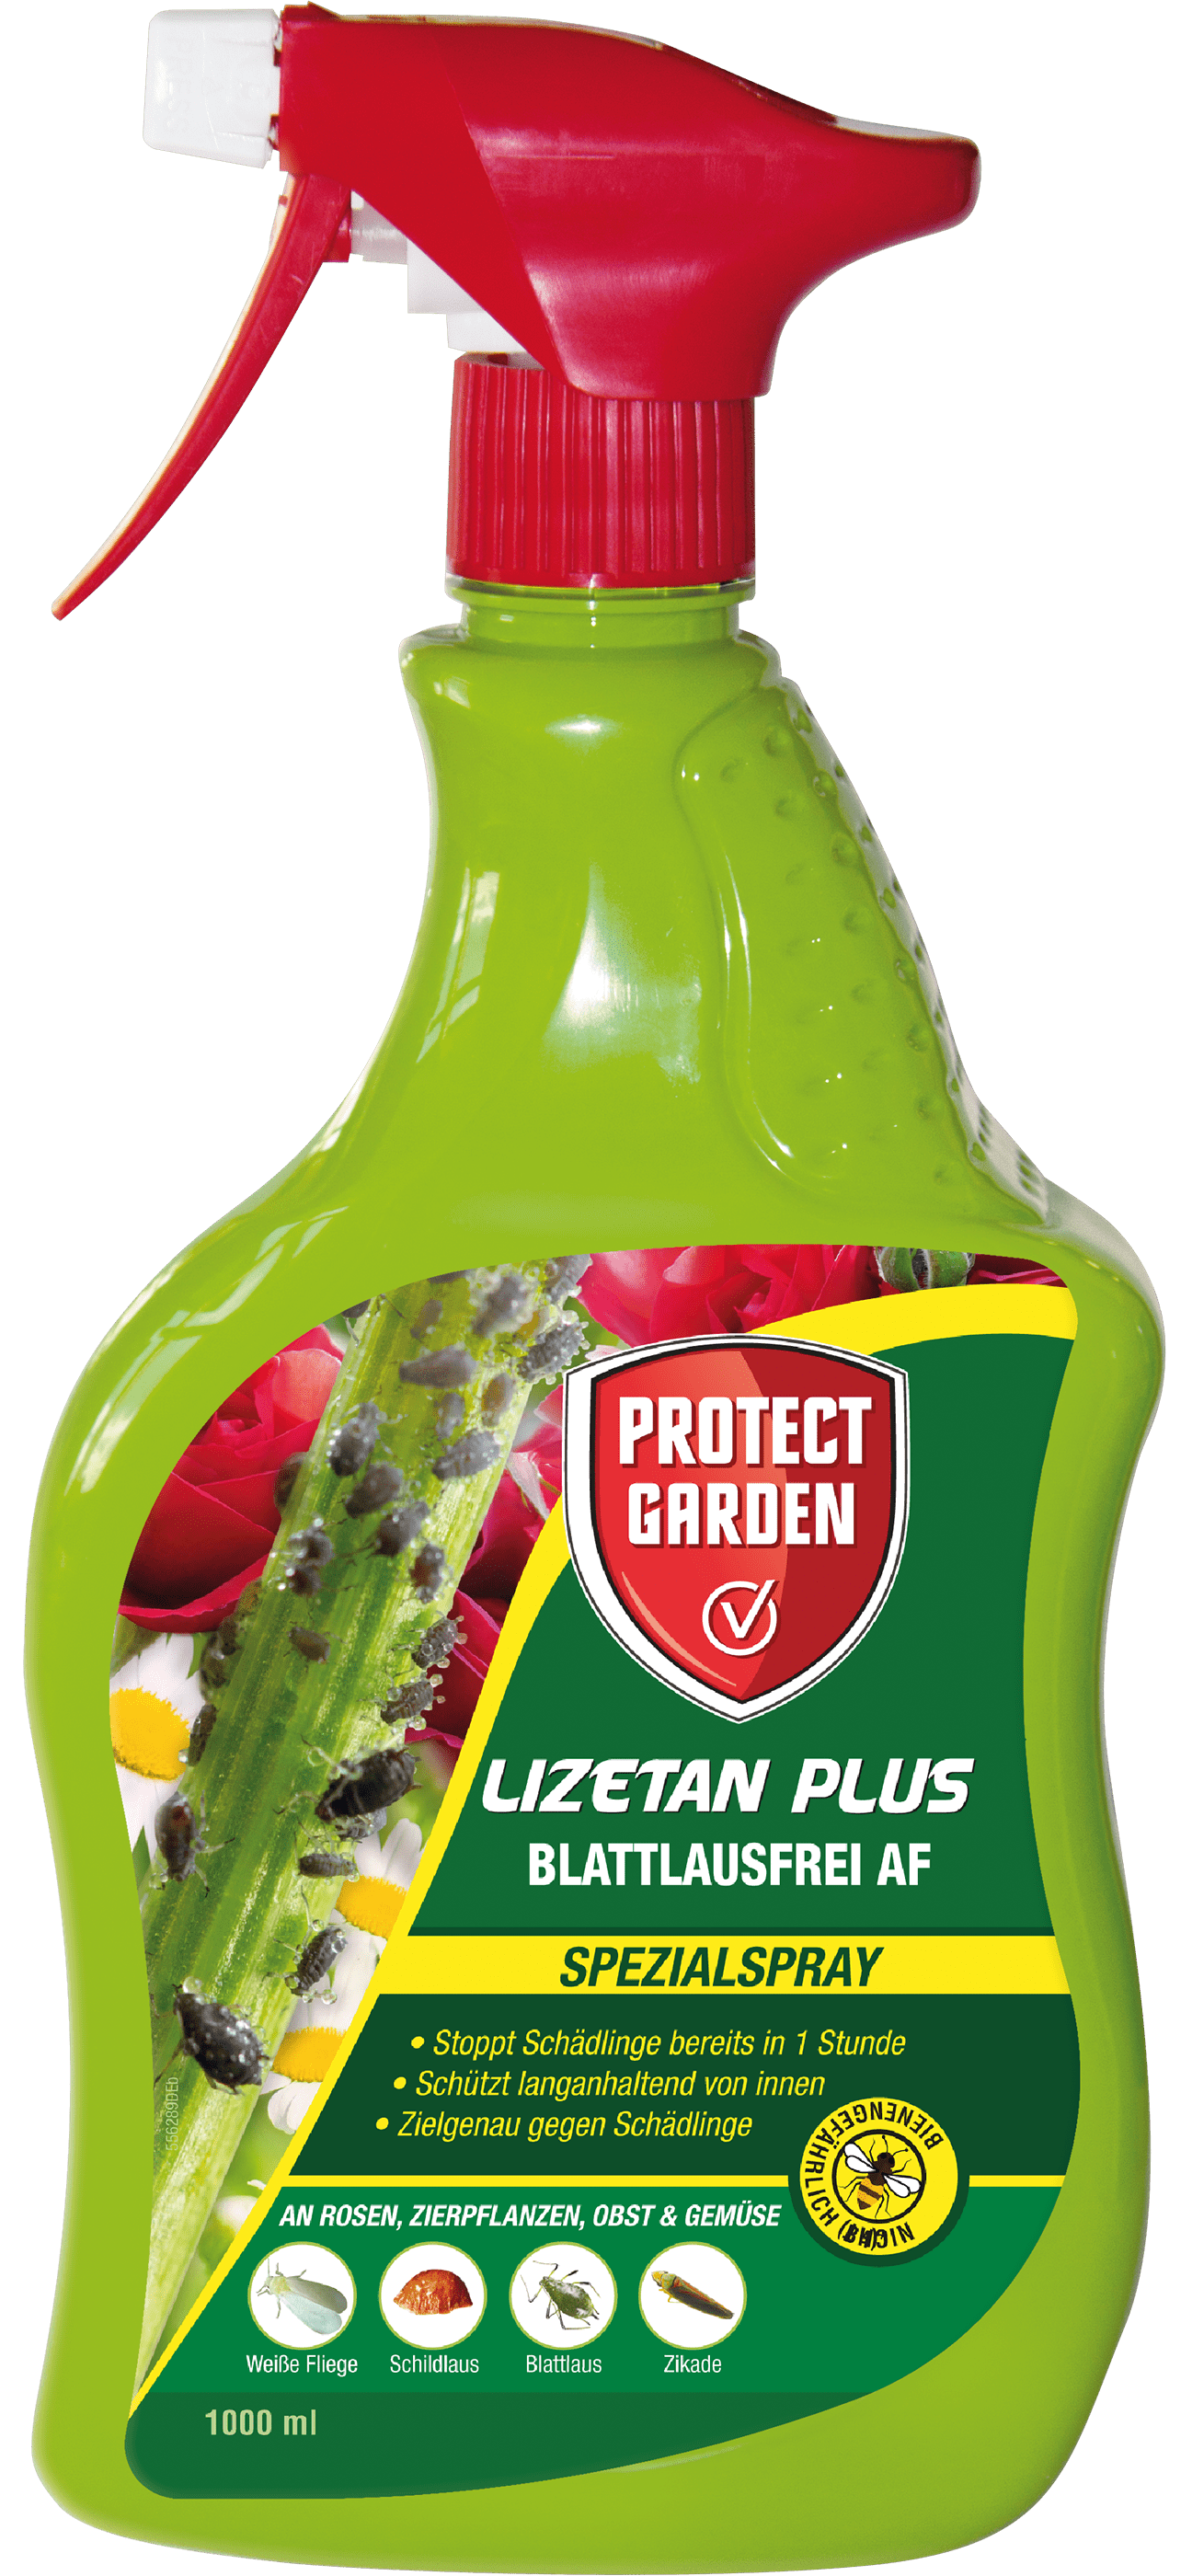 Protect Garden Lizetan Plus Blattlausfrei AF 1000 ml 